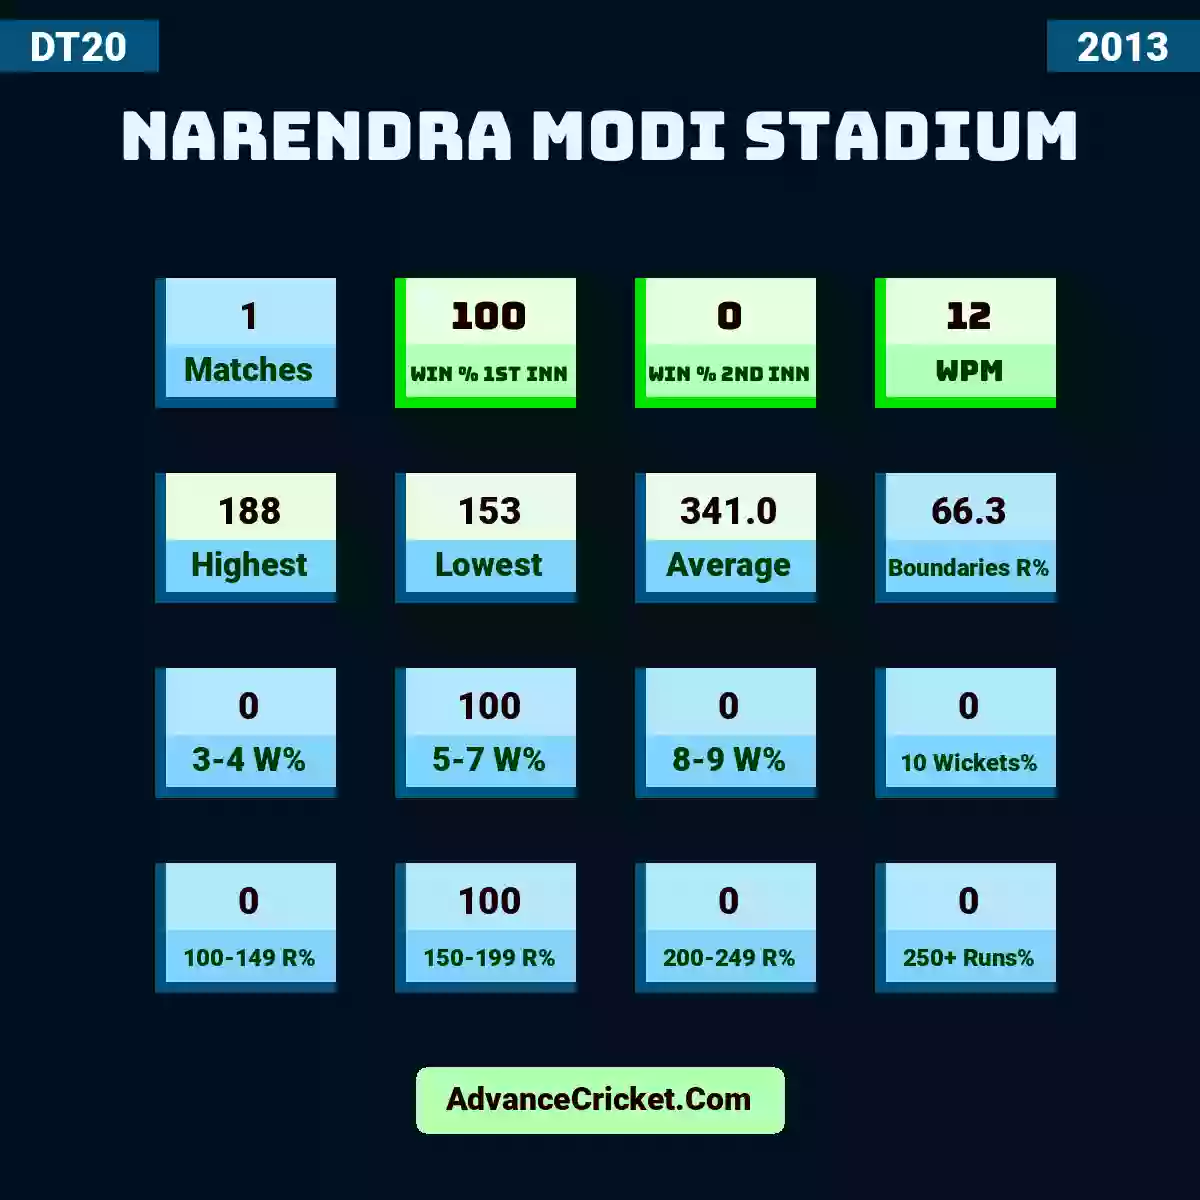 Image showing Narendra Modi Stadium with Matches: 1, Win % 1st Inn: 100, Win % 2nd Inn: 0, WPM: 12, Highest: 188, Lowest: 153, Average: 341.0, Boundaries R%: 66.3, 3-4 W%: 0, 5-7 W%: 100, 8-9 W%: 0, 10 Wickets%: 0, 100-149 R%: 0, 150-199 R%: 100, 200-249 R%: 0, 250+ Runs%: 0.